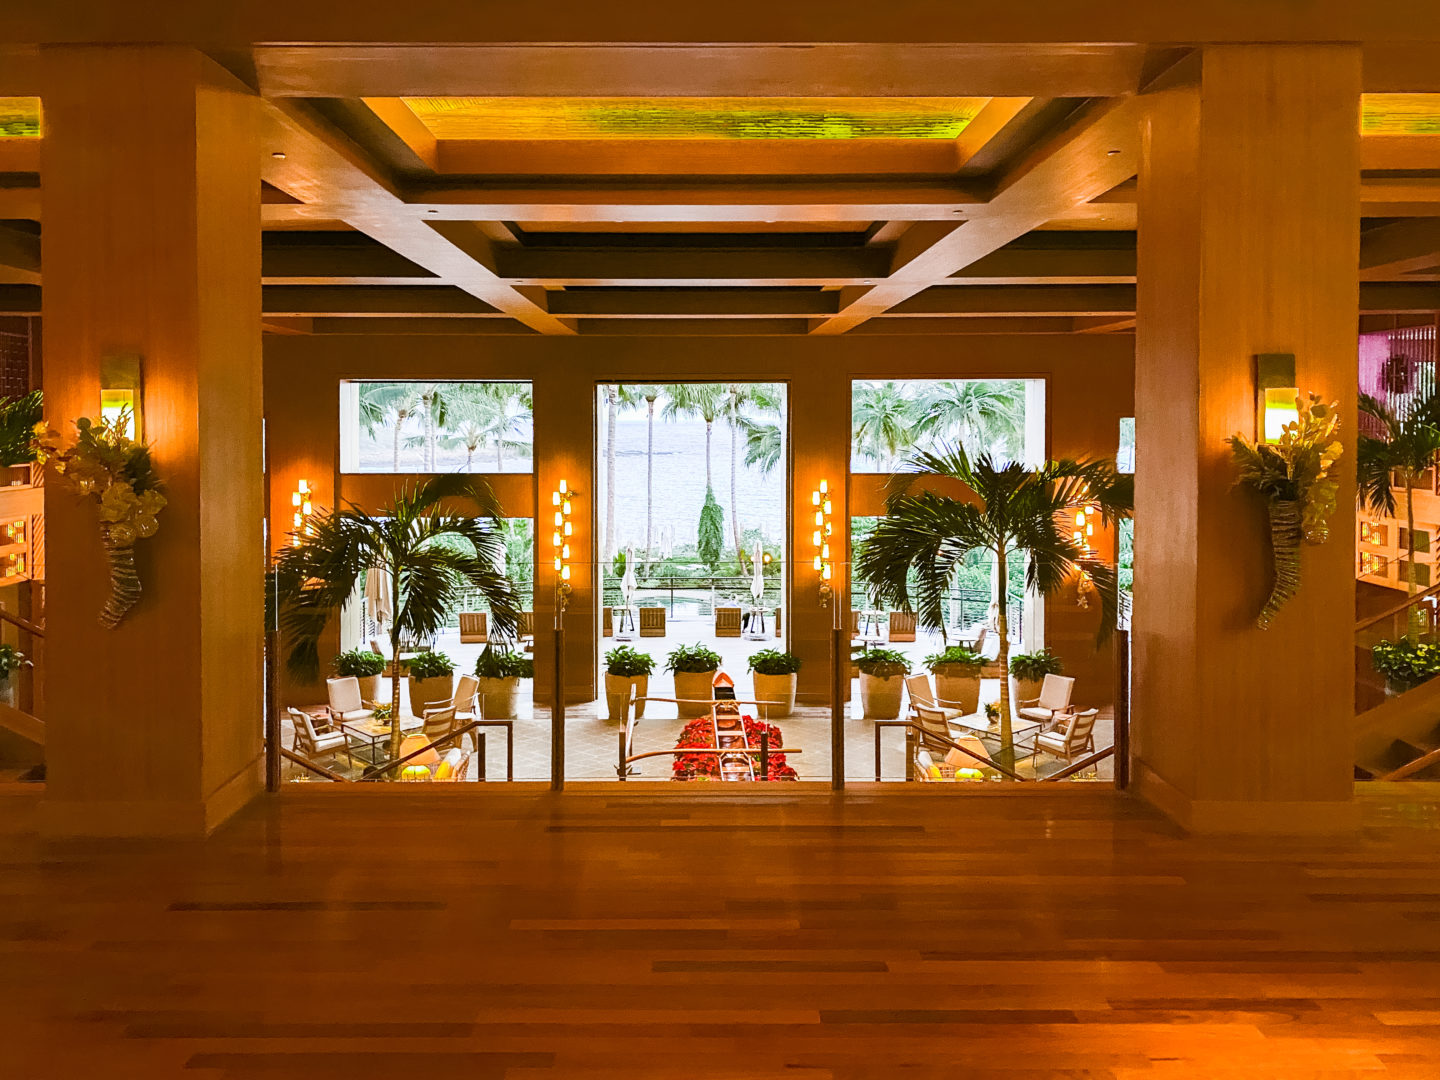 The lobby of the Four Seasons resort lanai.